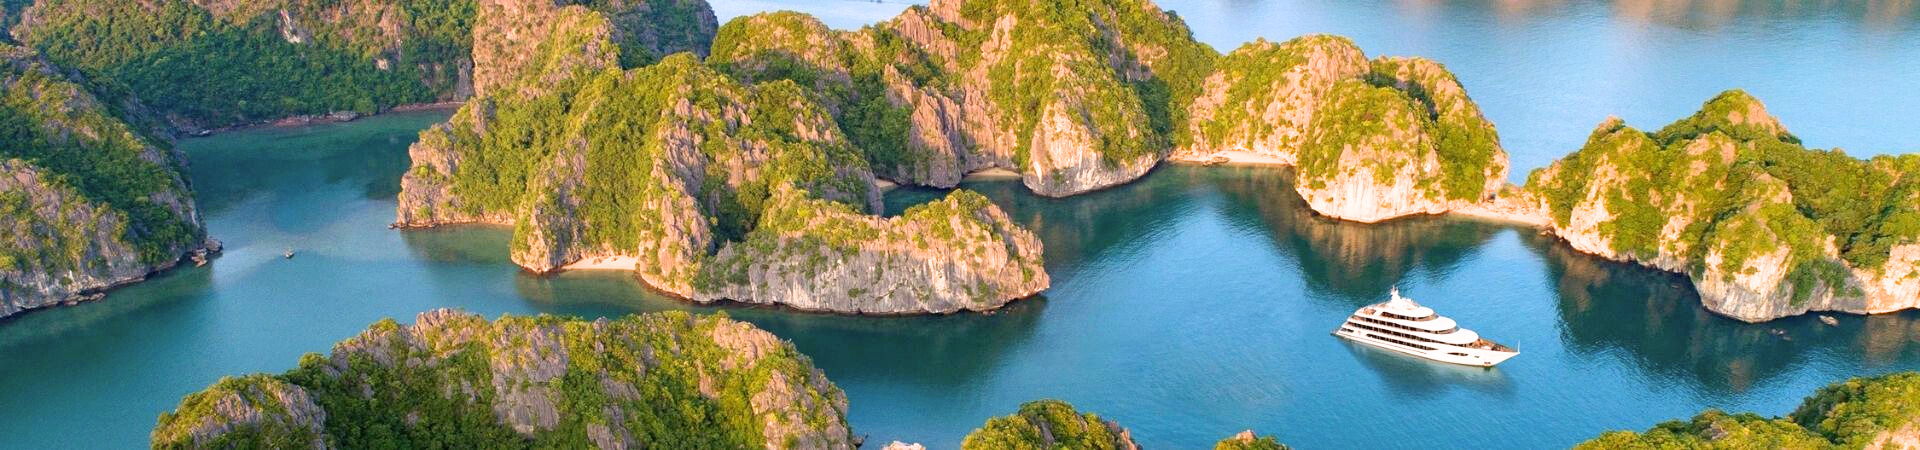 Bai Tu Long Bay 2 Days on Dragon Legend Cruise